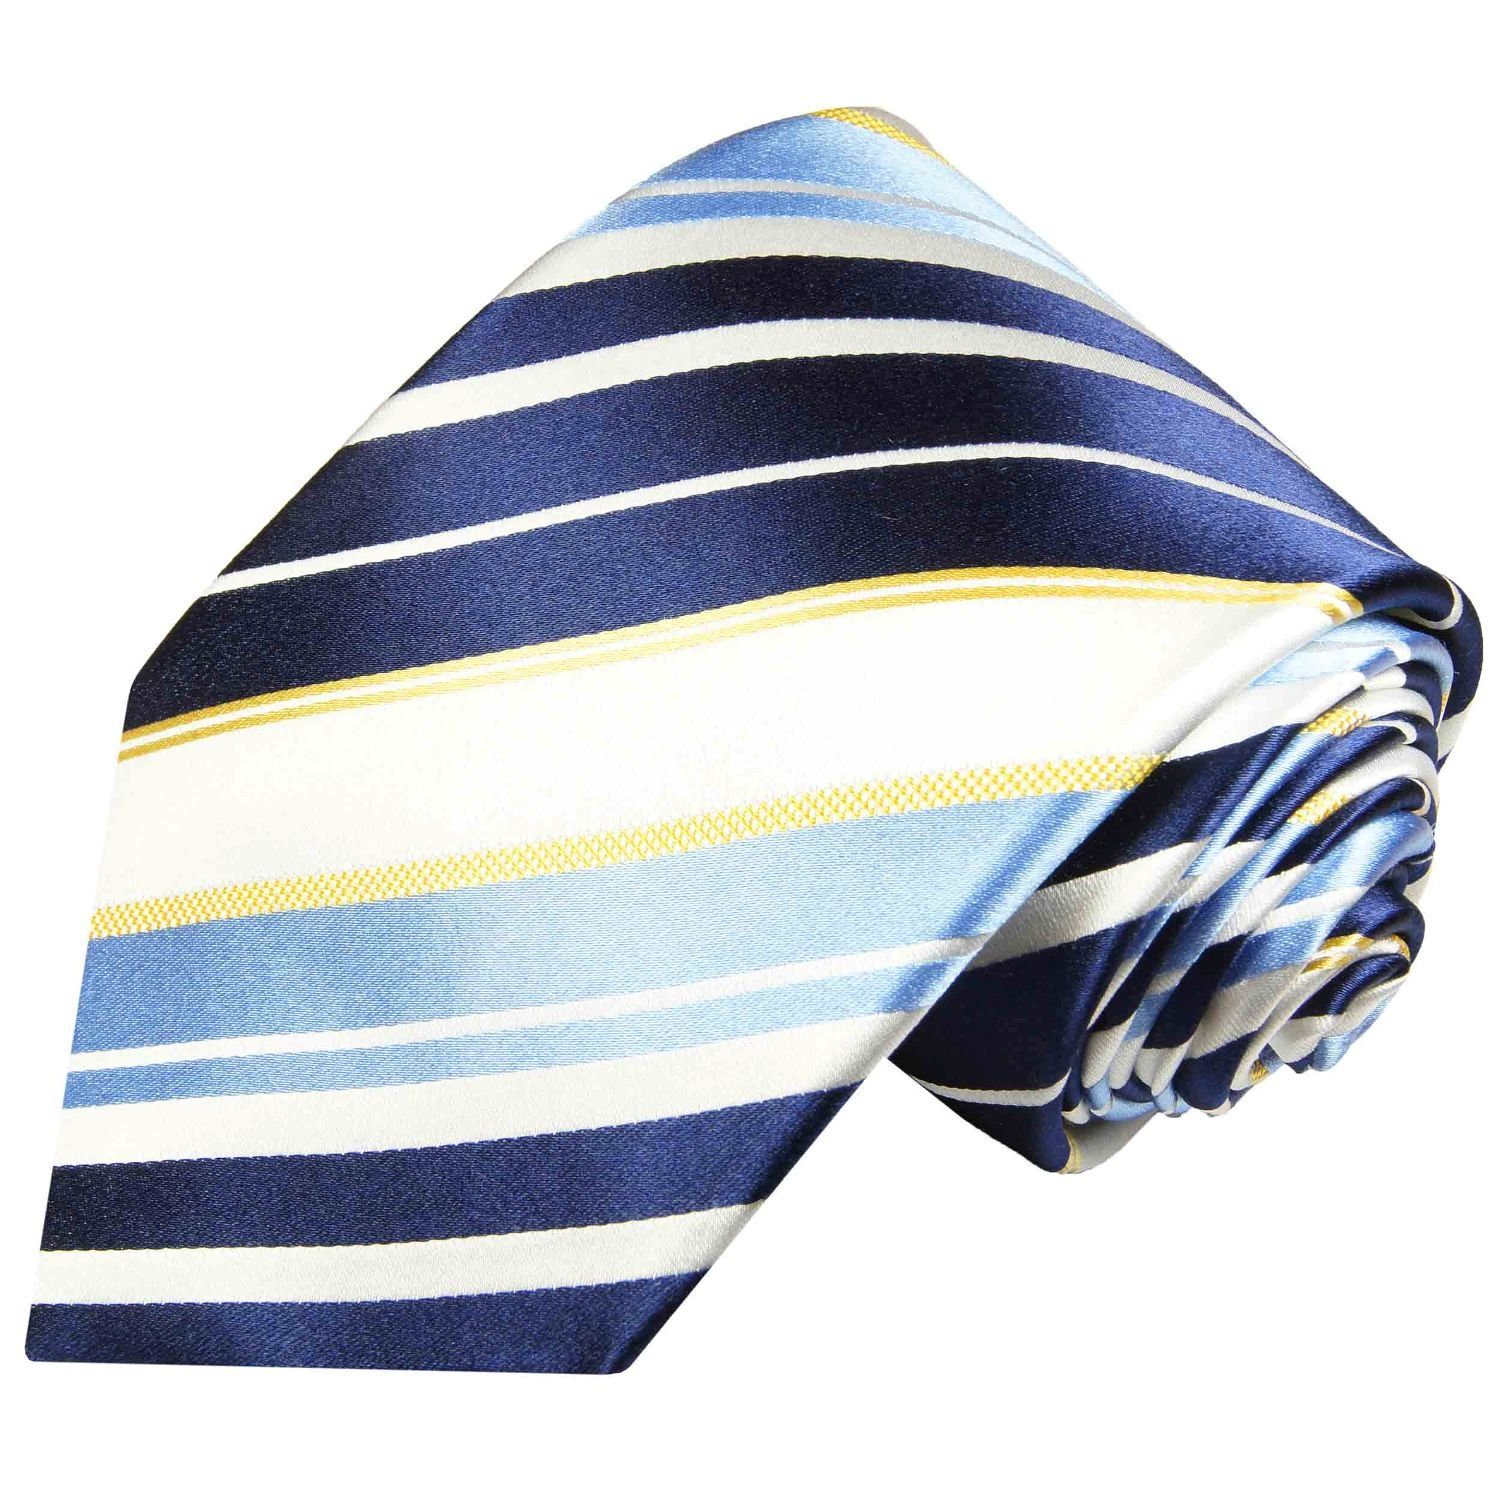 Paul Malone Krawatte Moderne Herren Seidenkrawatte gestreift 100% Seide Breit (8cm), blau weiß 924